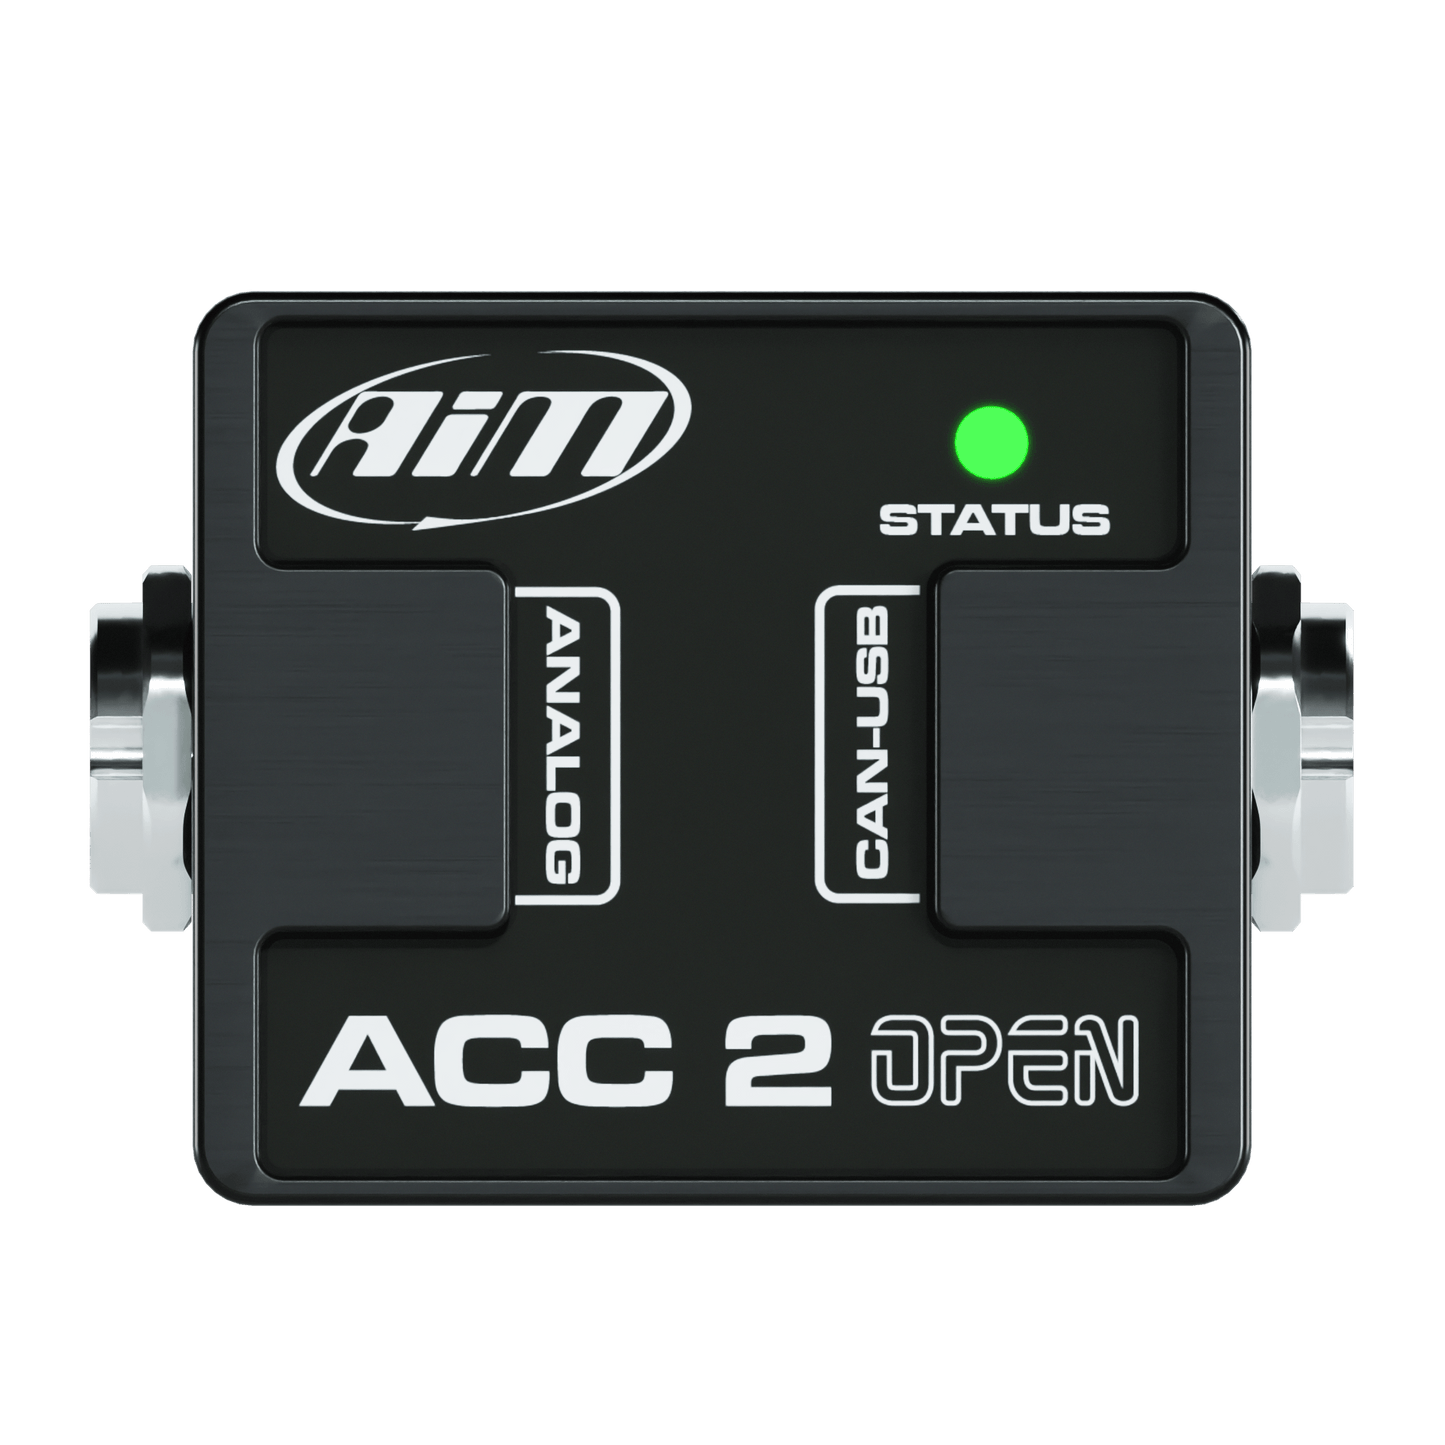 AiM ACC 2 Open Analogue CAN Converter - AimShop.com